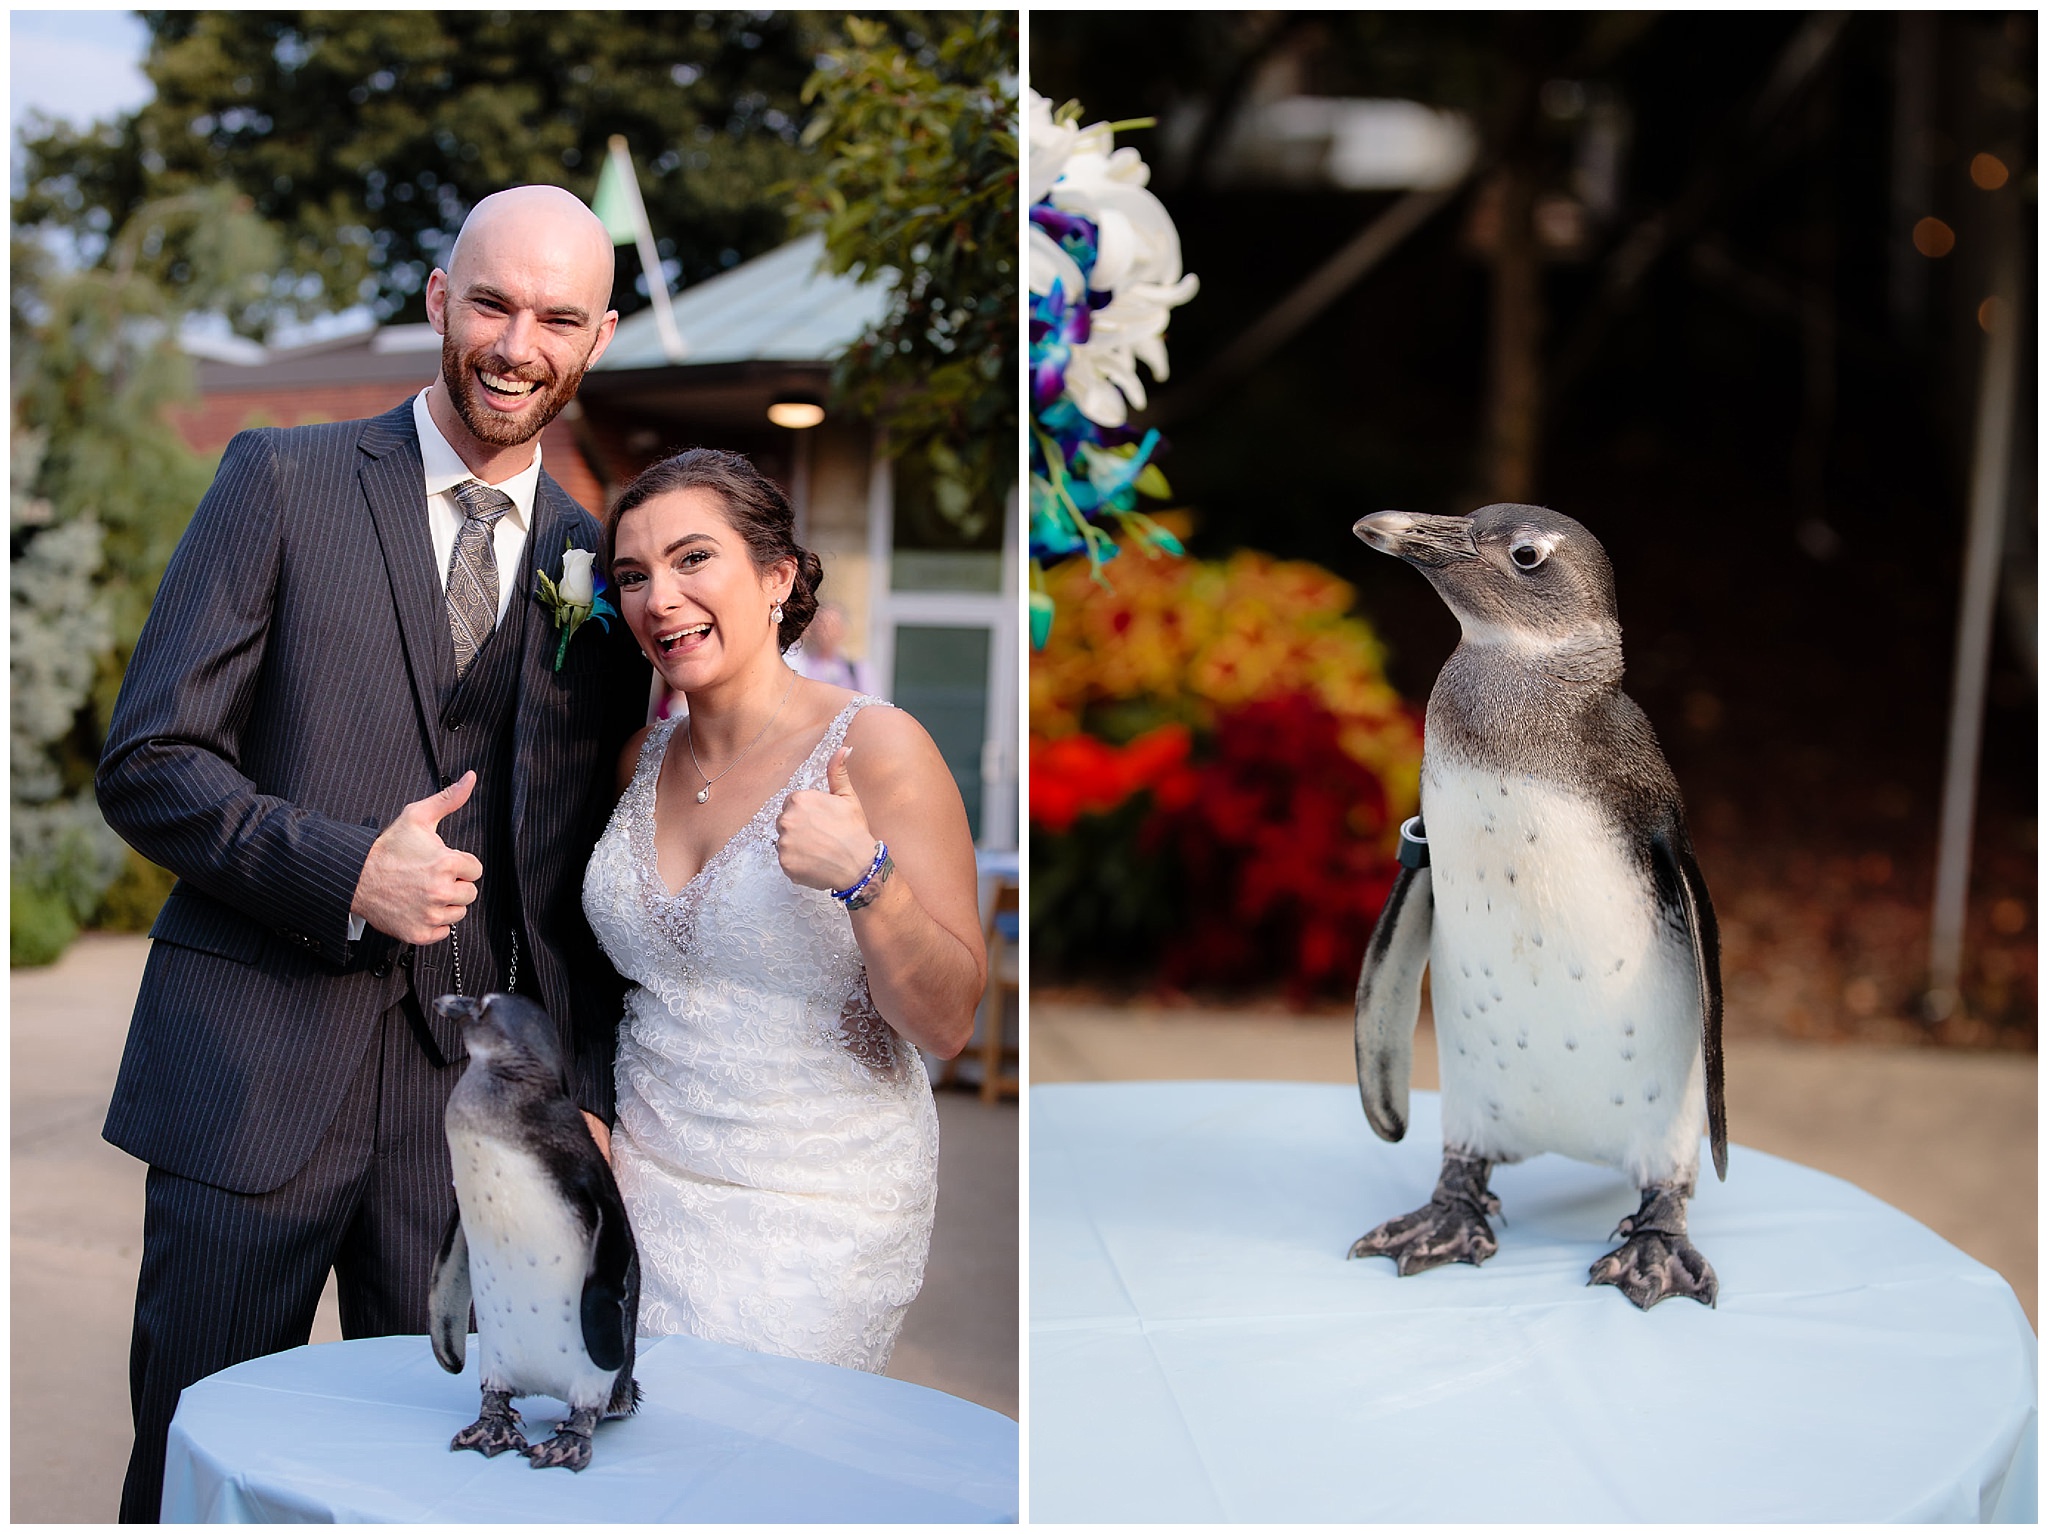 Newlyweds meet DJ the penguin at their National Aviary wedding